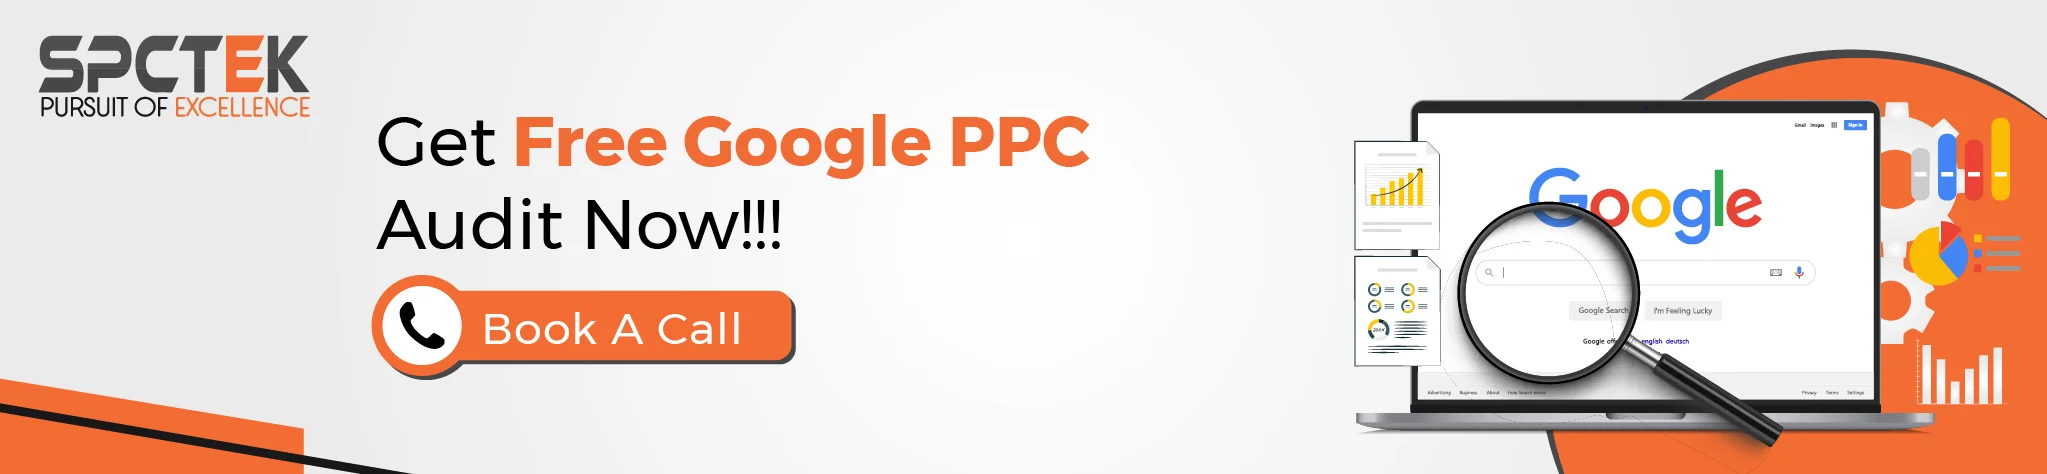 Google PPC Free Audit